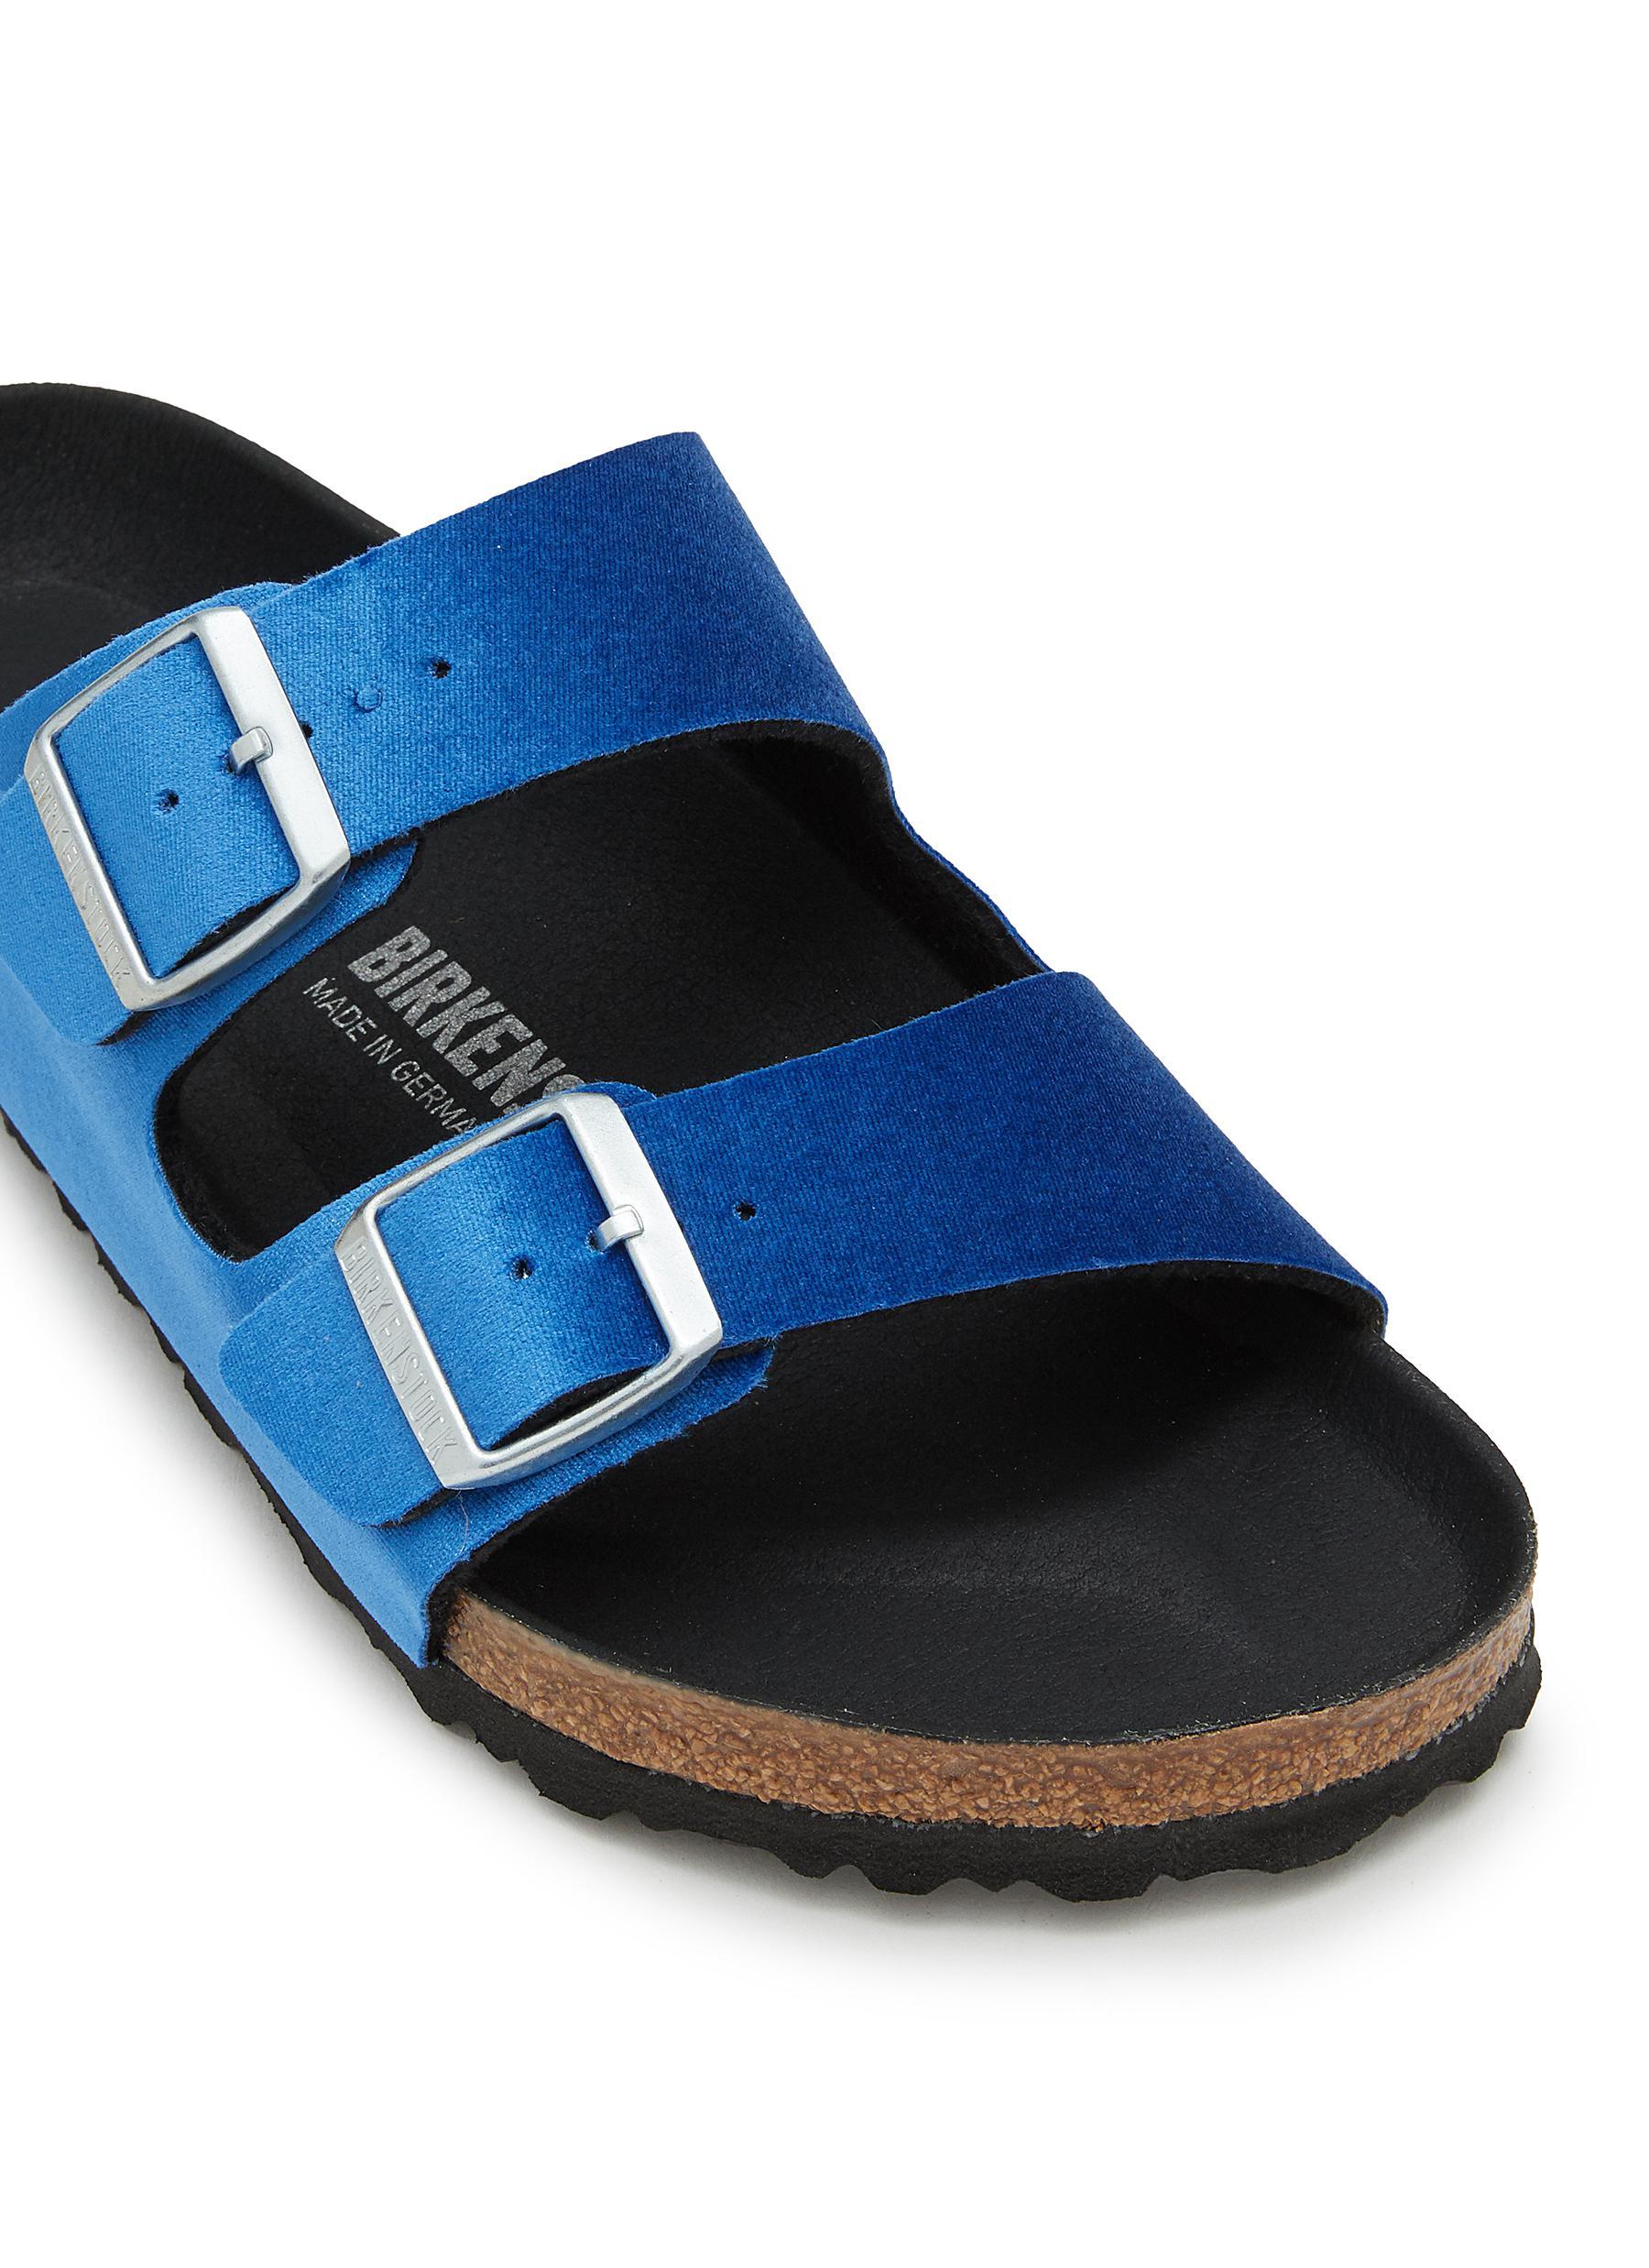 Birkenstock Arizona Bb Velvet Sandals in Blue